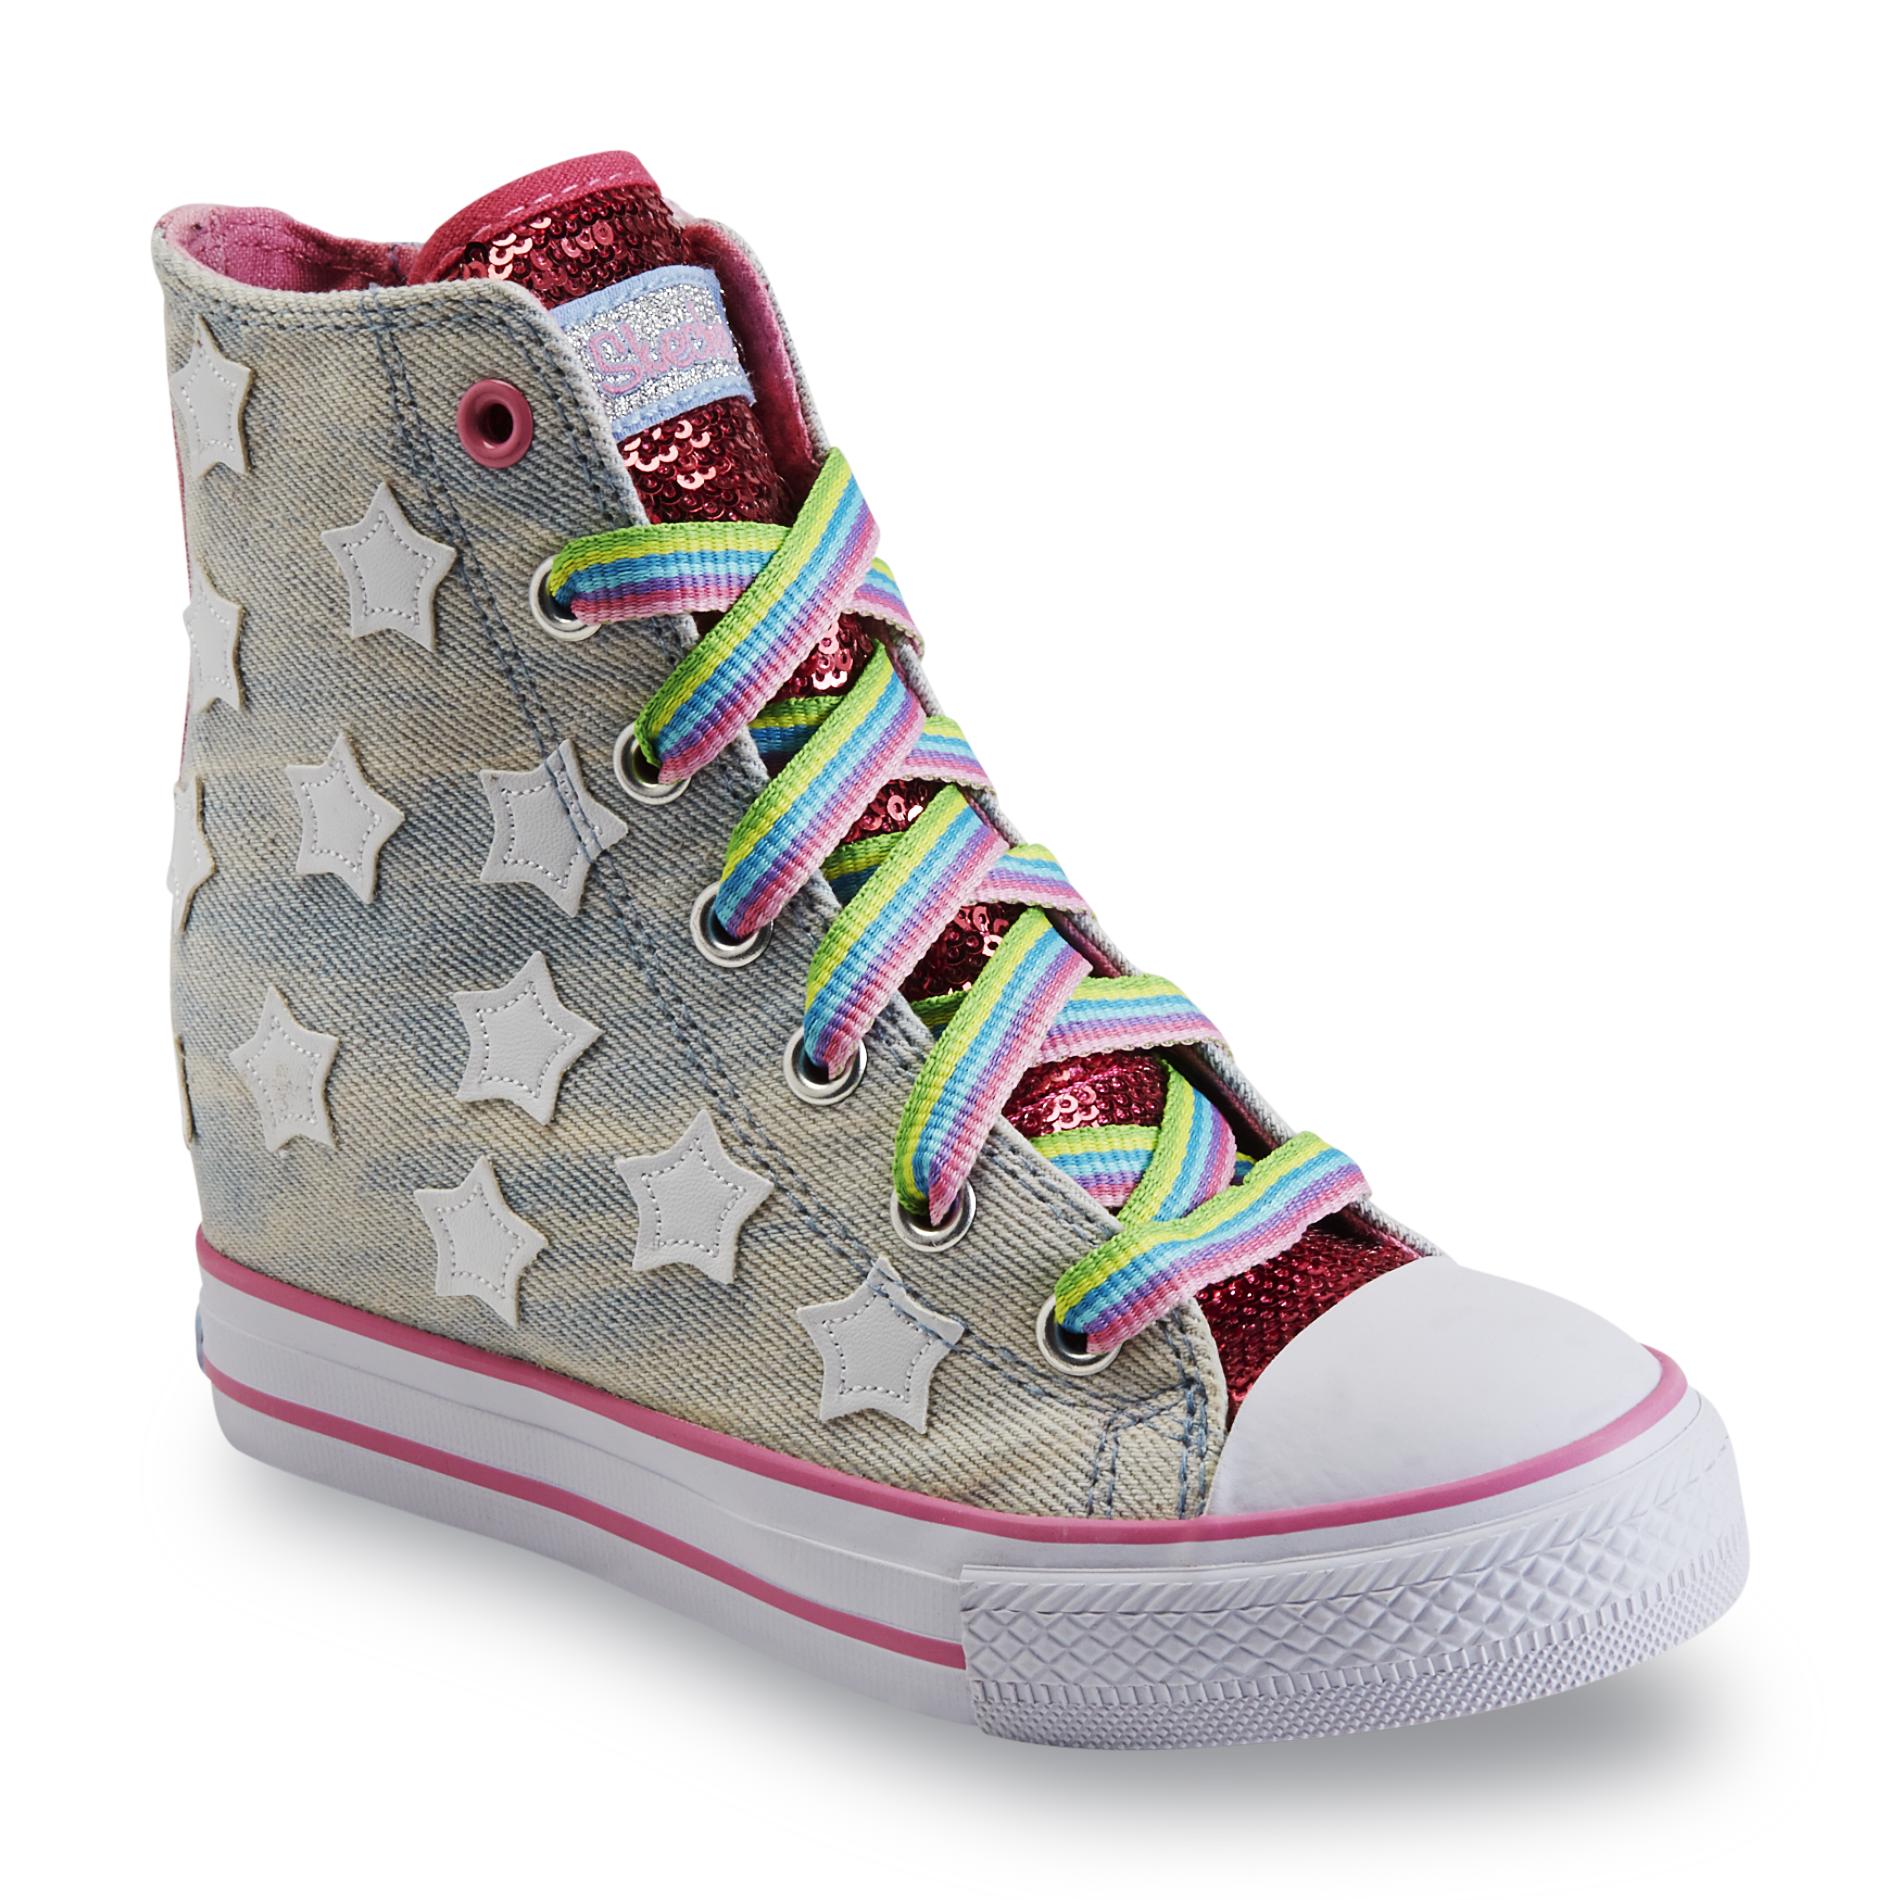 Skechers Girl's Starry Skies Pink/Denim/White High-Top Hidden Wedge Sneaker 5 - (Youth)